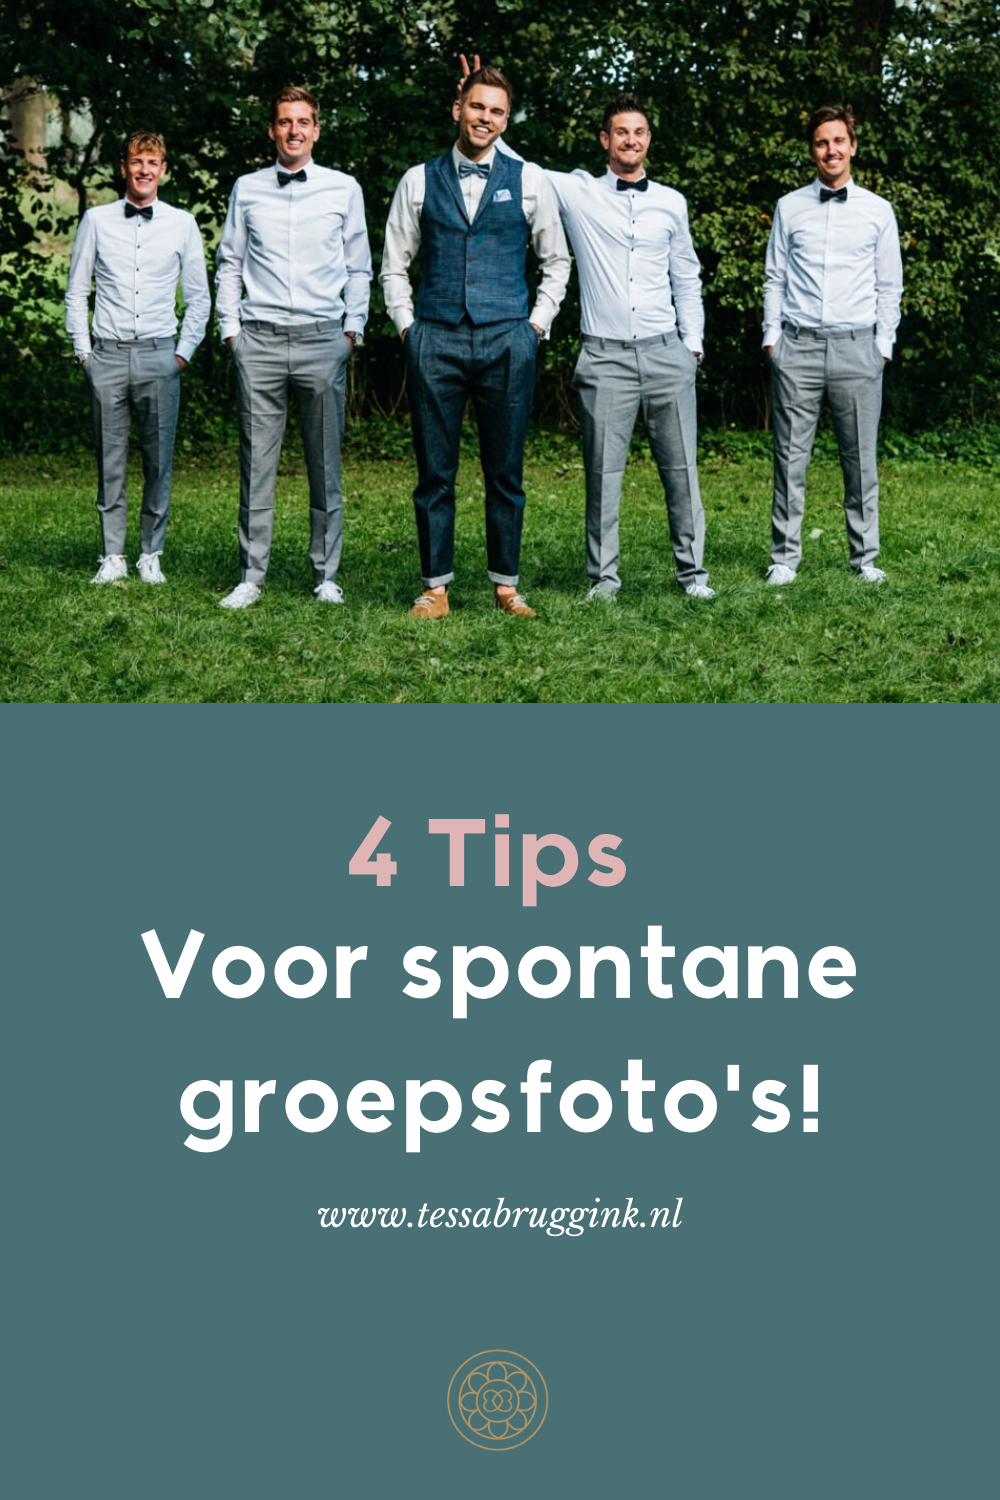 4 Tips voor spontane groepsfoto’s